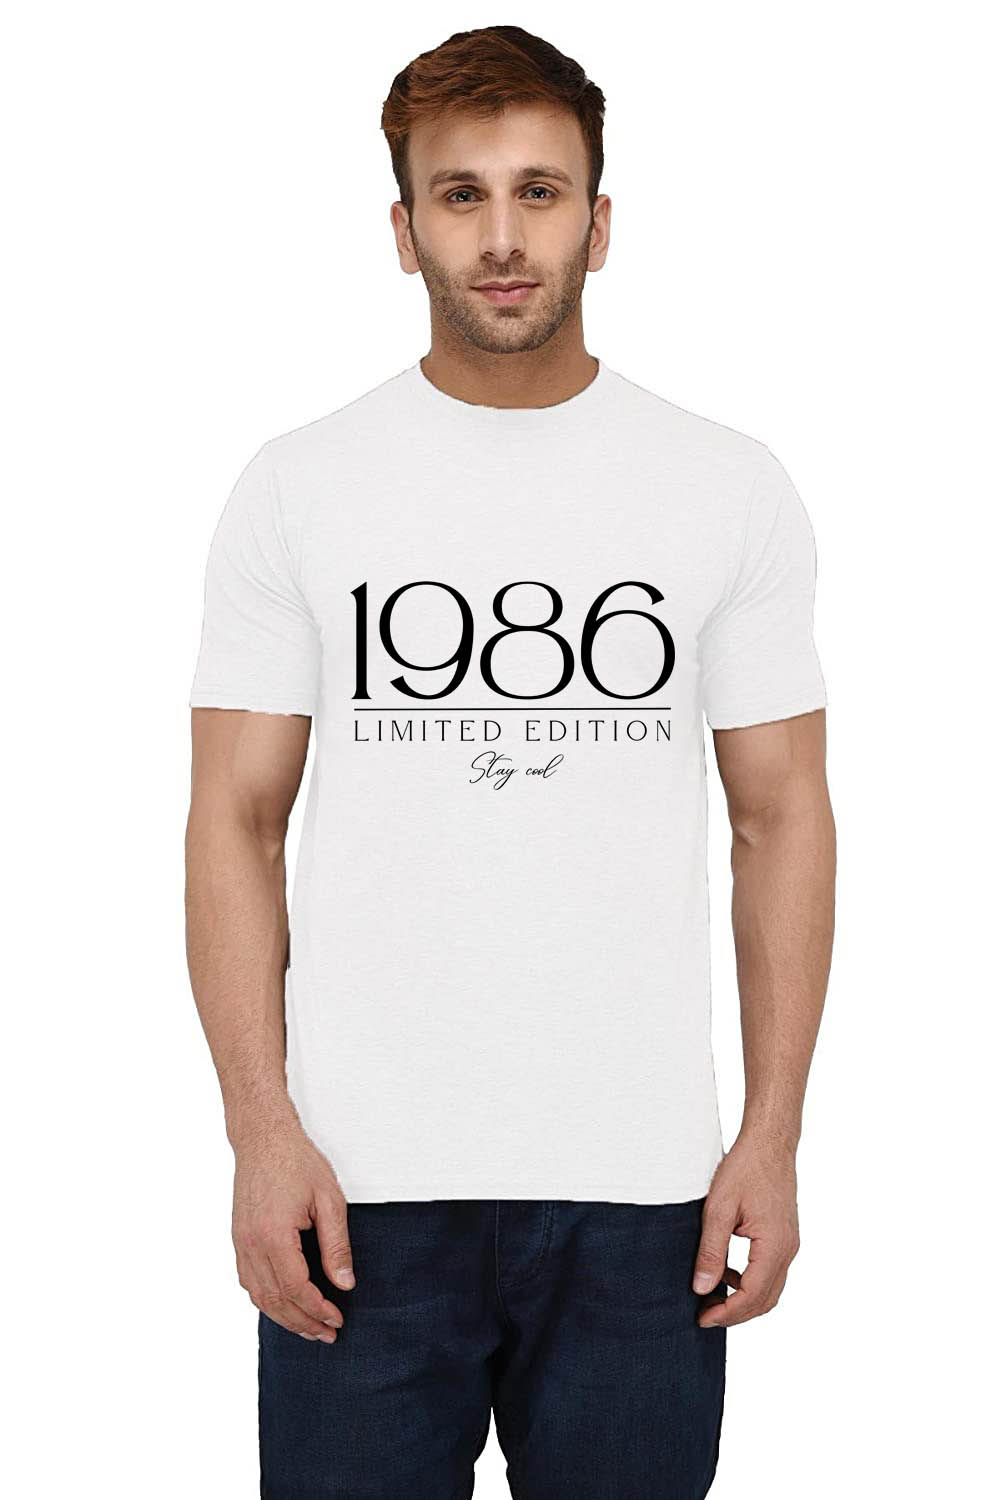 1986 Limited Edition westside shirts for Men - Zoobang